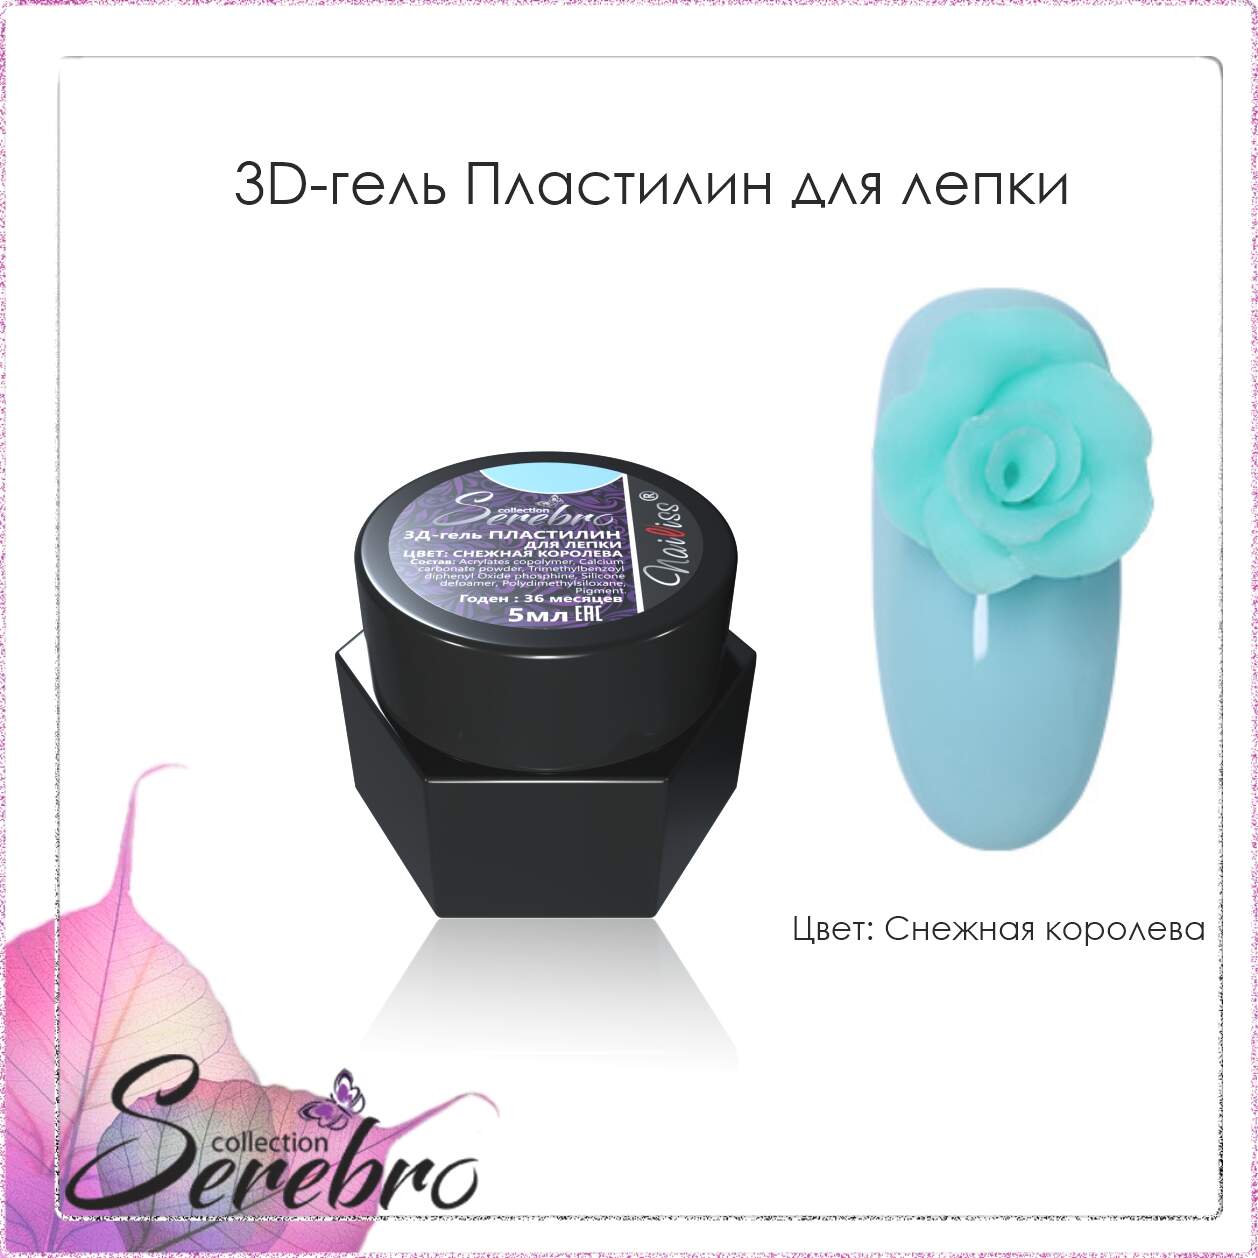 3D гель Пластилин для лепки "Serebro" (снежная королева), 5 мл